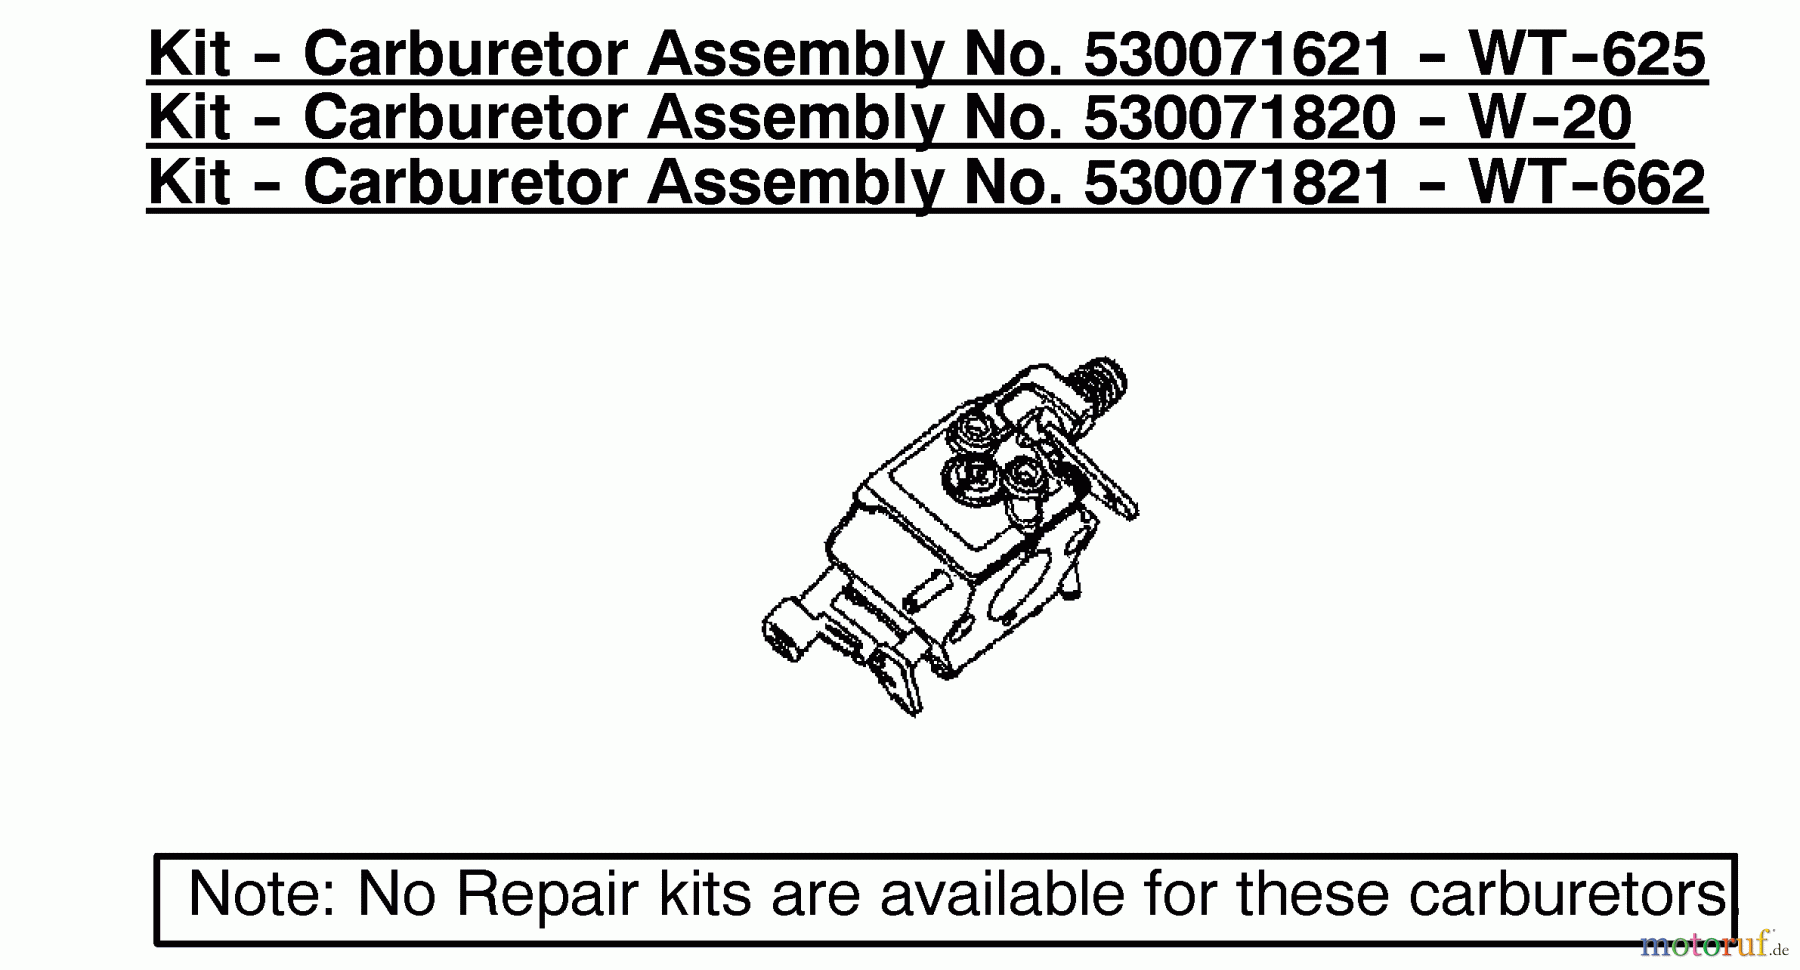  Poulan / Weed Eater Motorsägen 2550 (Type 4) - Poulan Woodmaster Chainsaw Kit - Carburetor Assembly 530071621/530071820/530071821